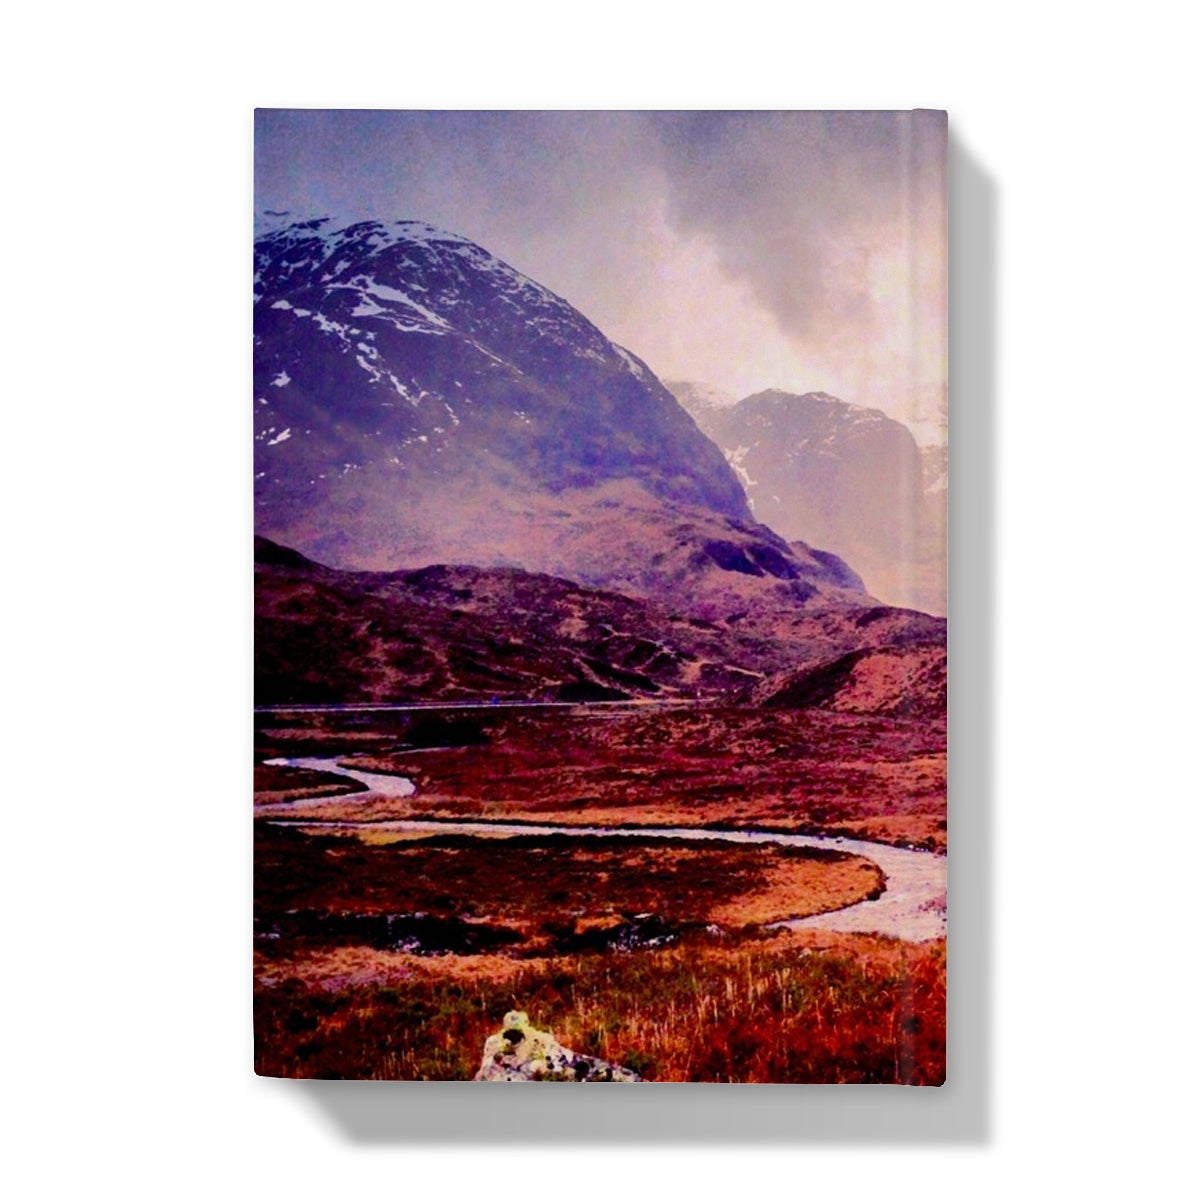 A Brooding Glencoe Art Gifts Hardback Journal-Journals & Notebooks-Glencoe Art Gallery-Paintings, Prints, Homeware, Art Gifts From Scotland By Scottish Artist Kevin Hunter